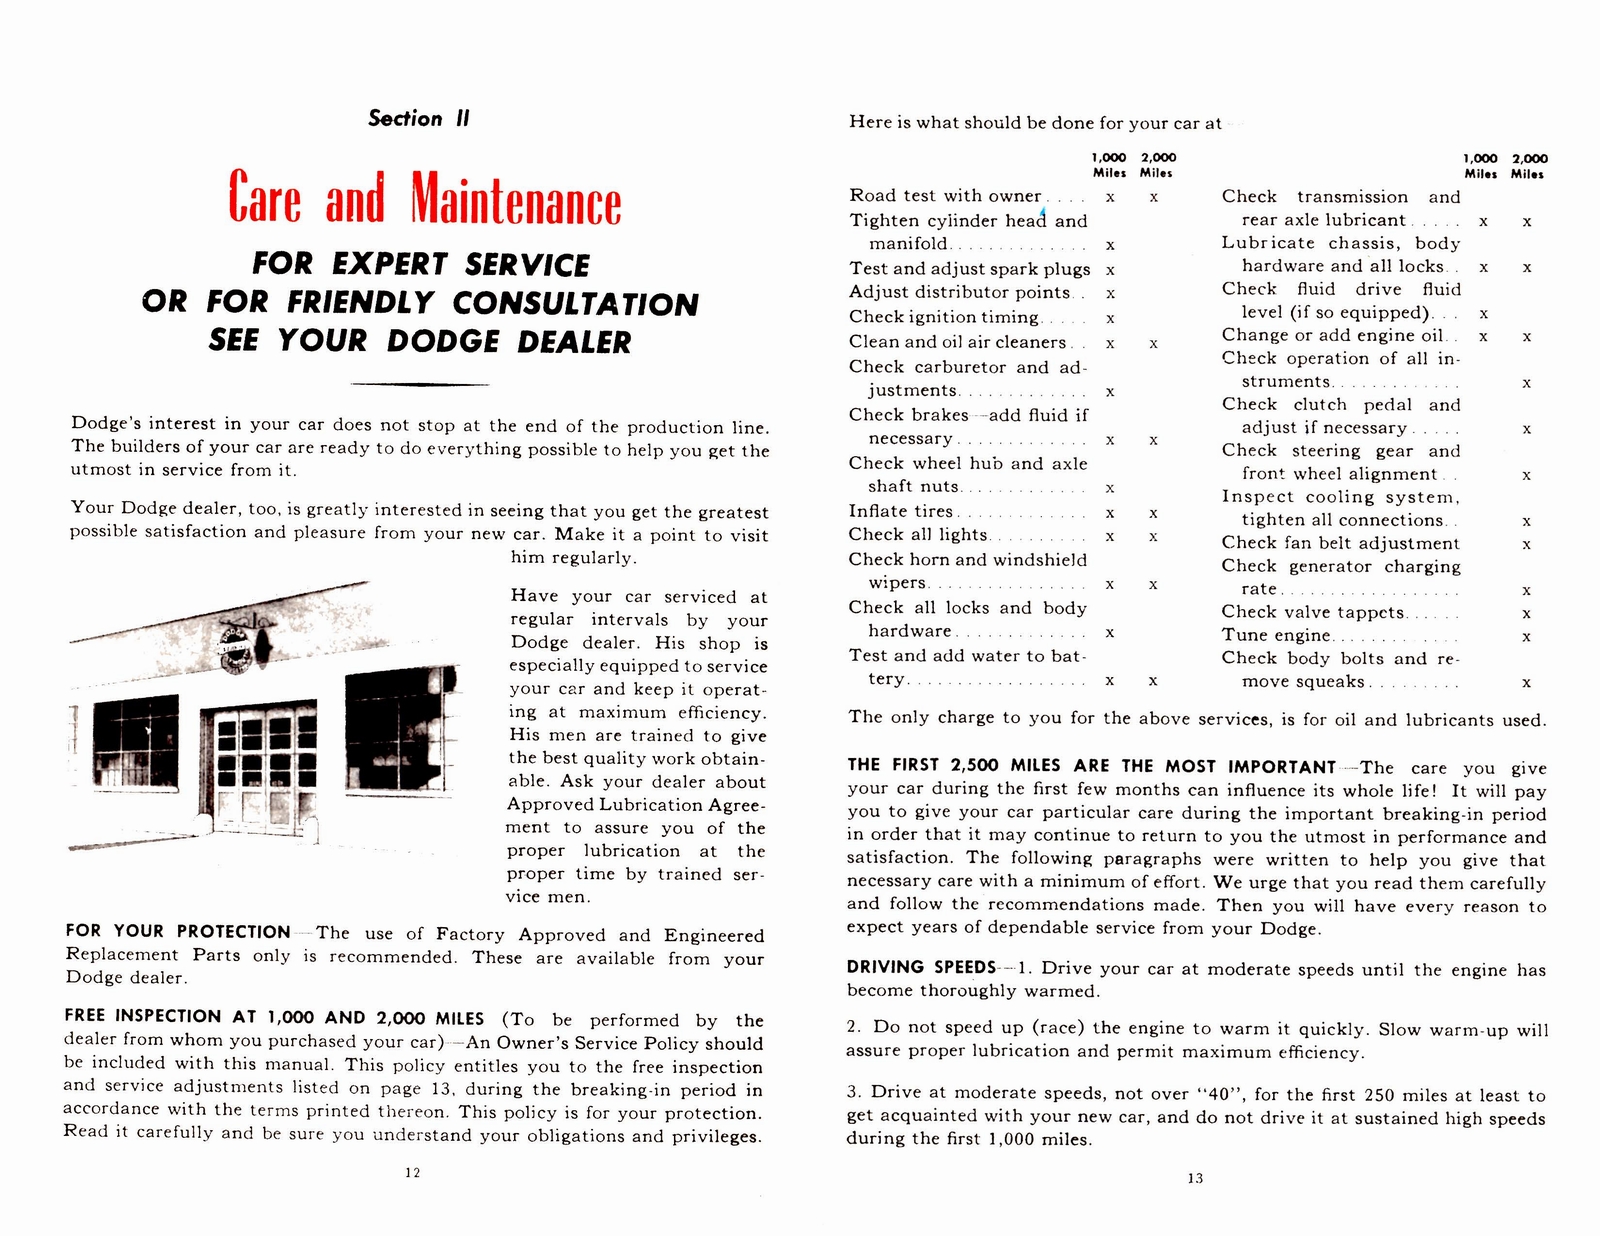 n_1947 Dodge Manual-12-13.jpg